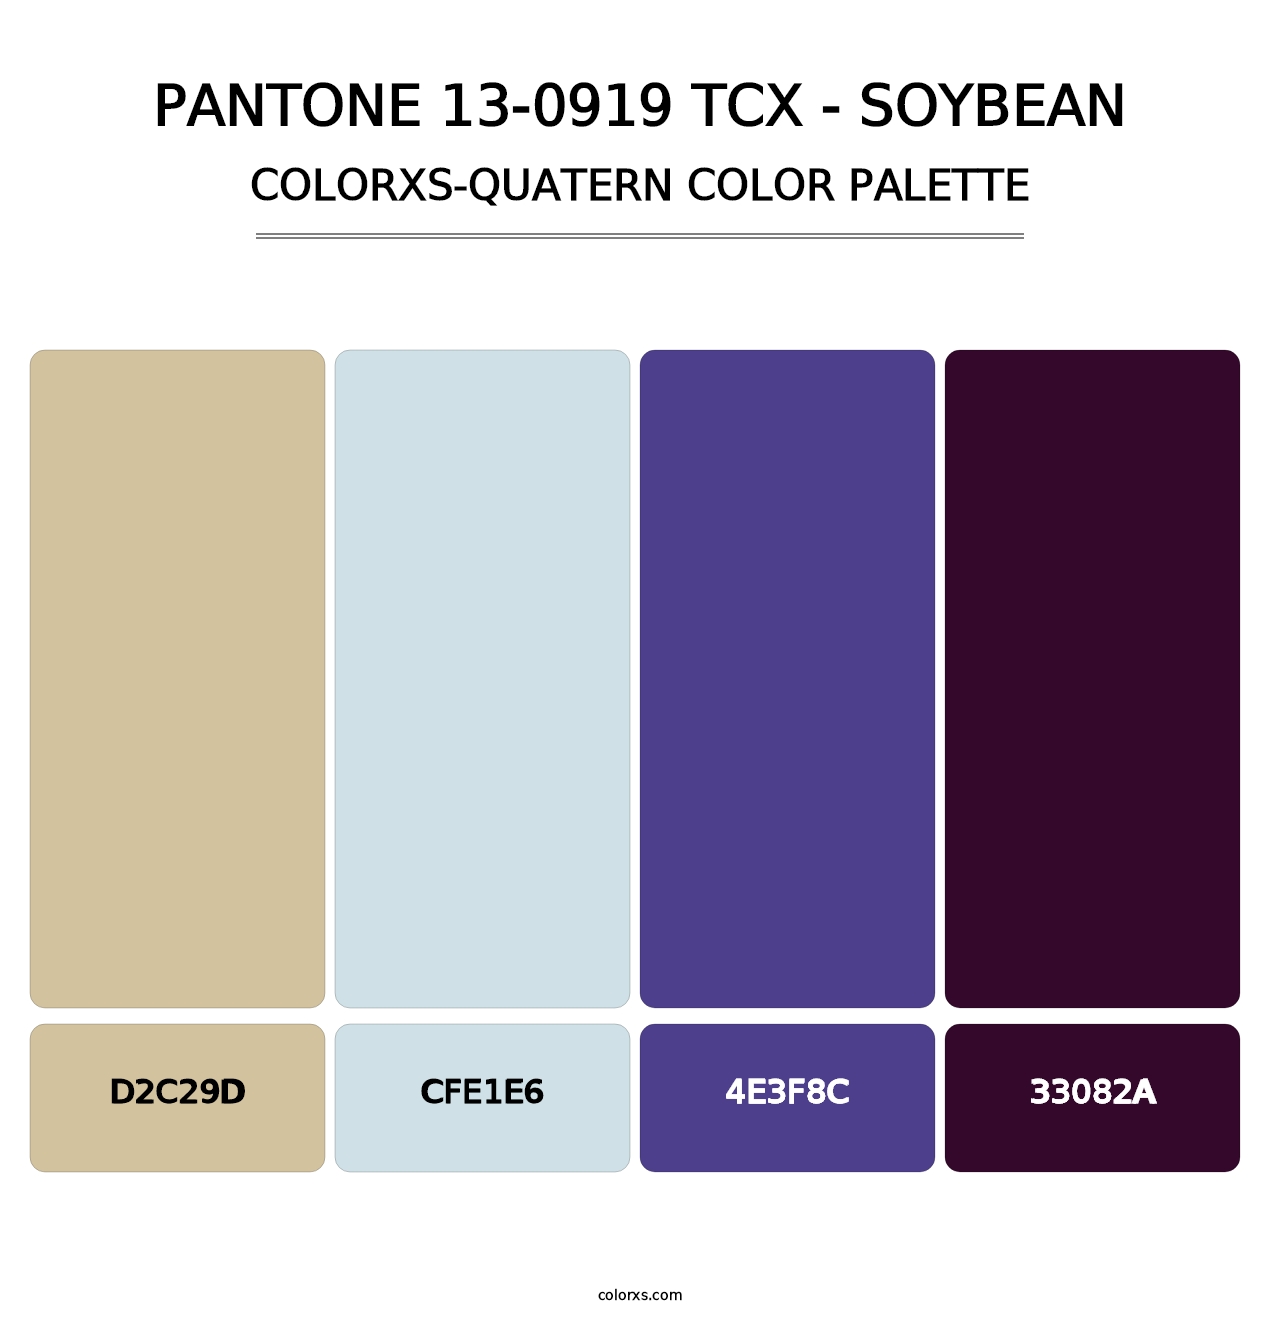 PANTONE 13-0919 TCX - Soybean - Colorxs Quatern Palette